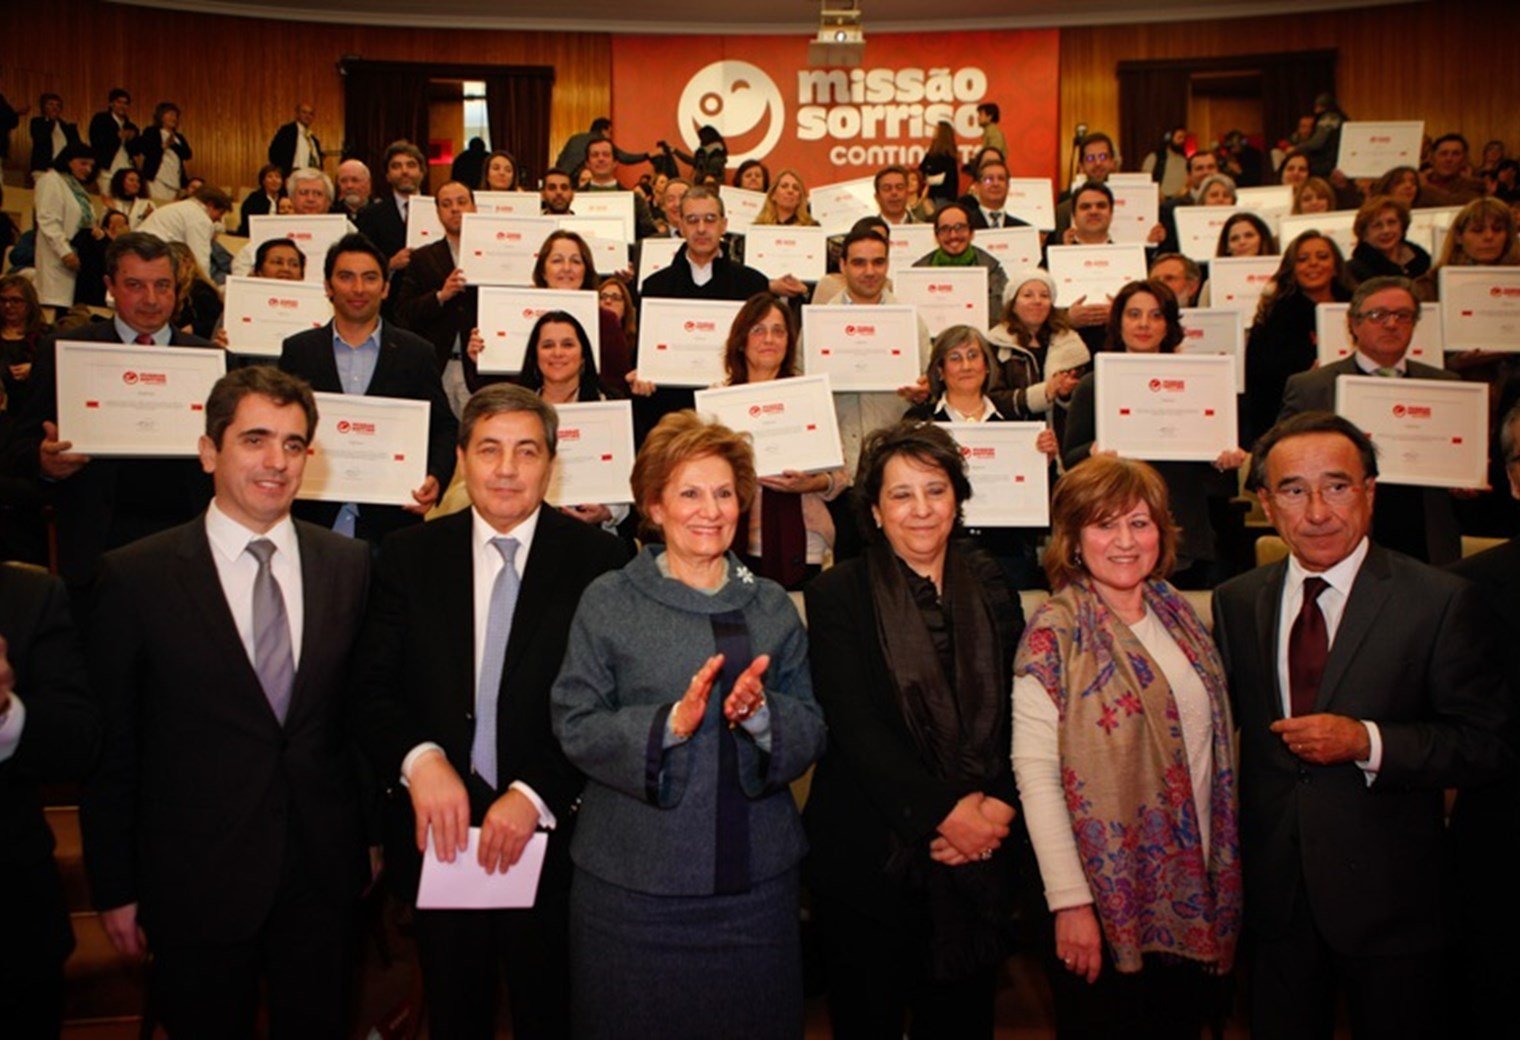 Missão Sorriso 2014: OBRIGADO!